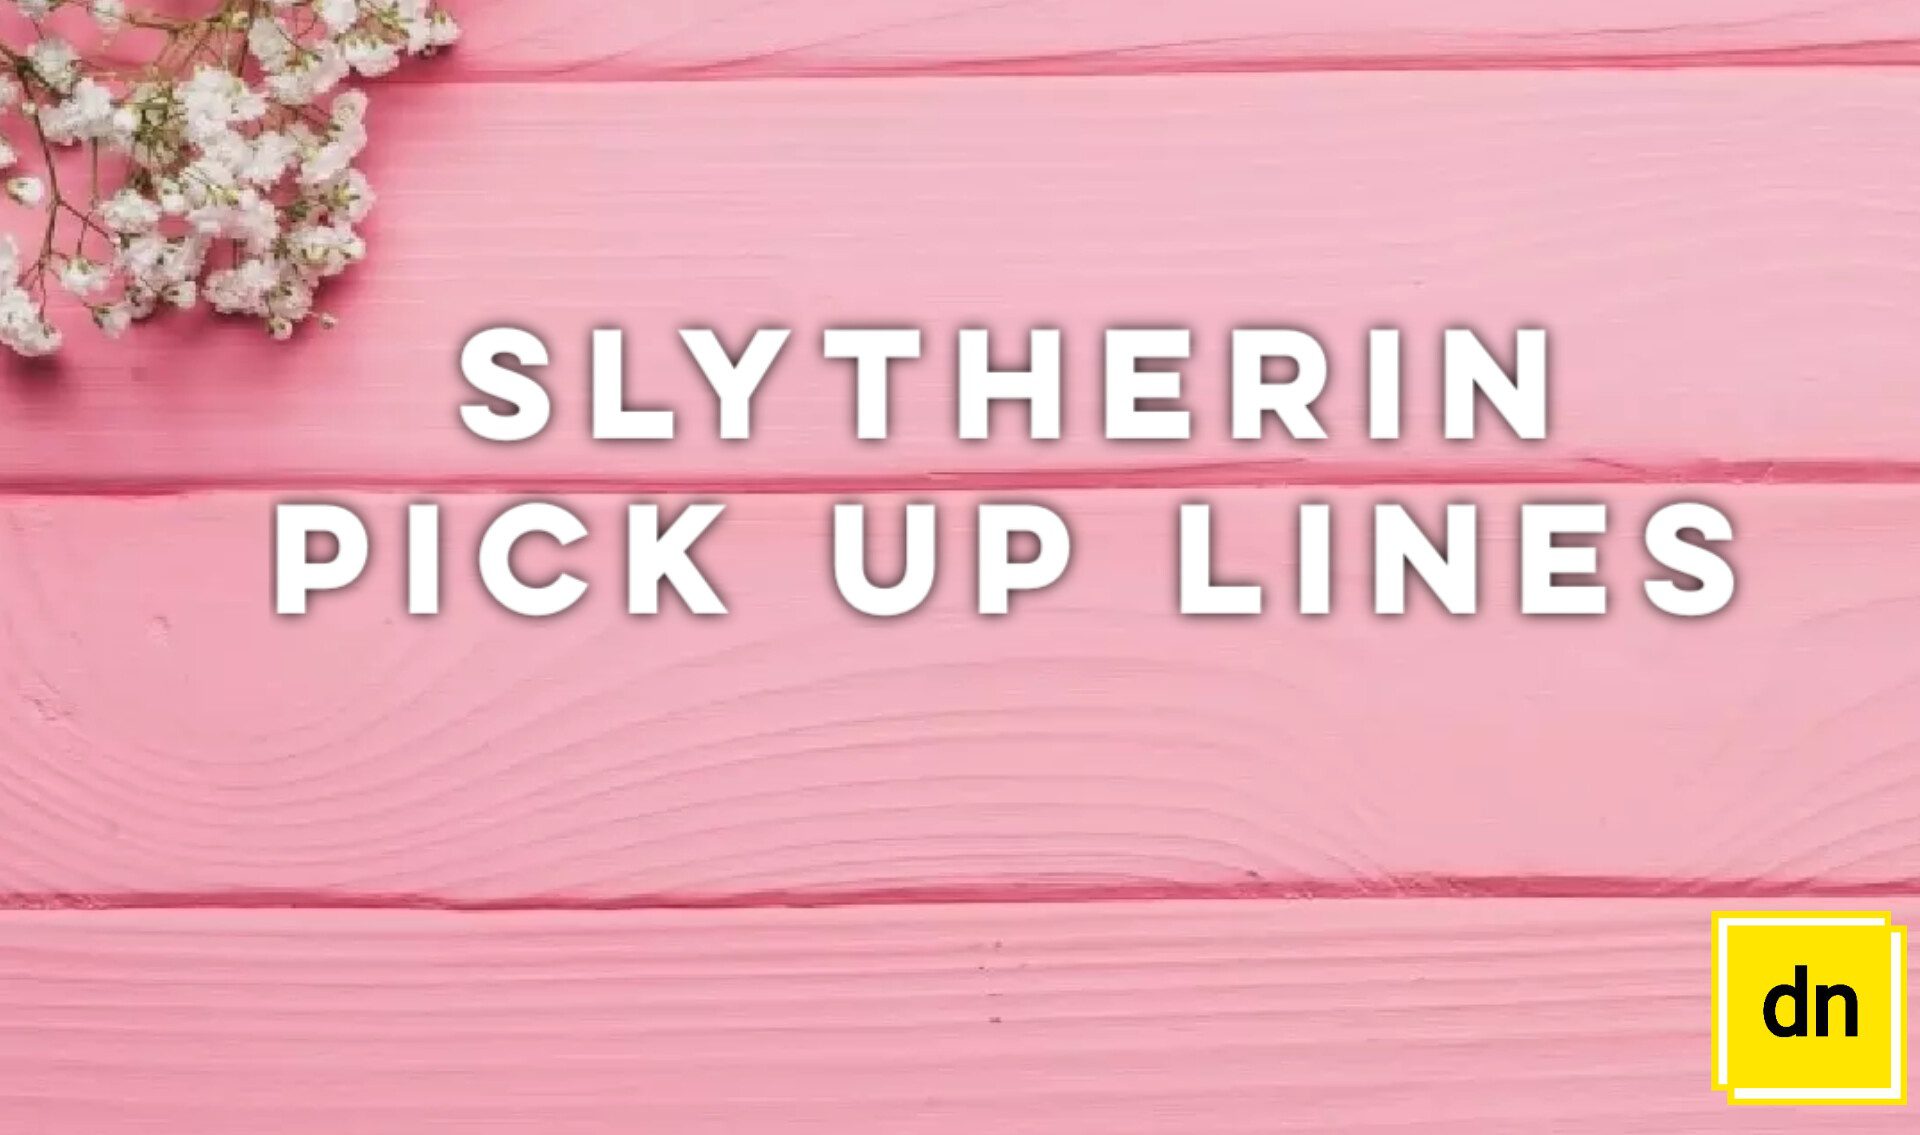 Slytherin pick up lines